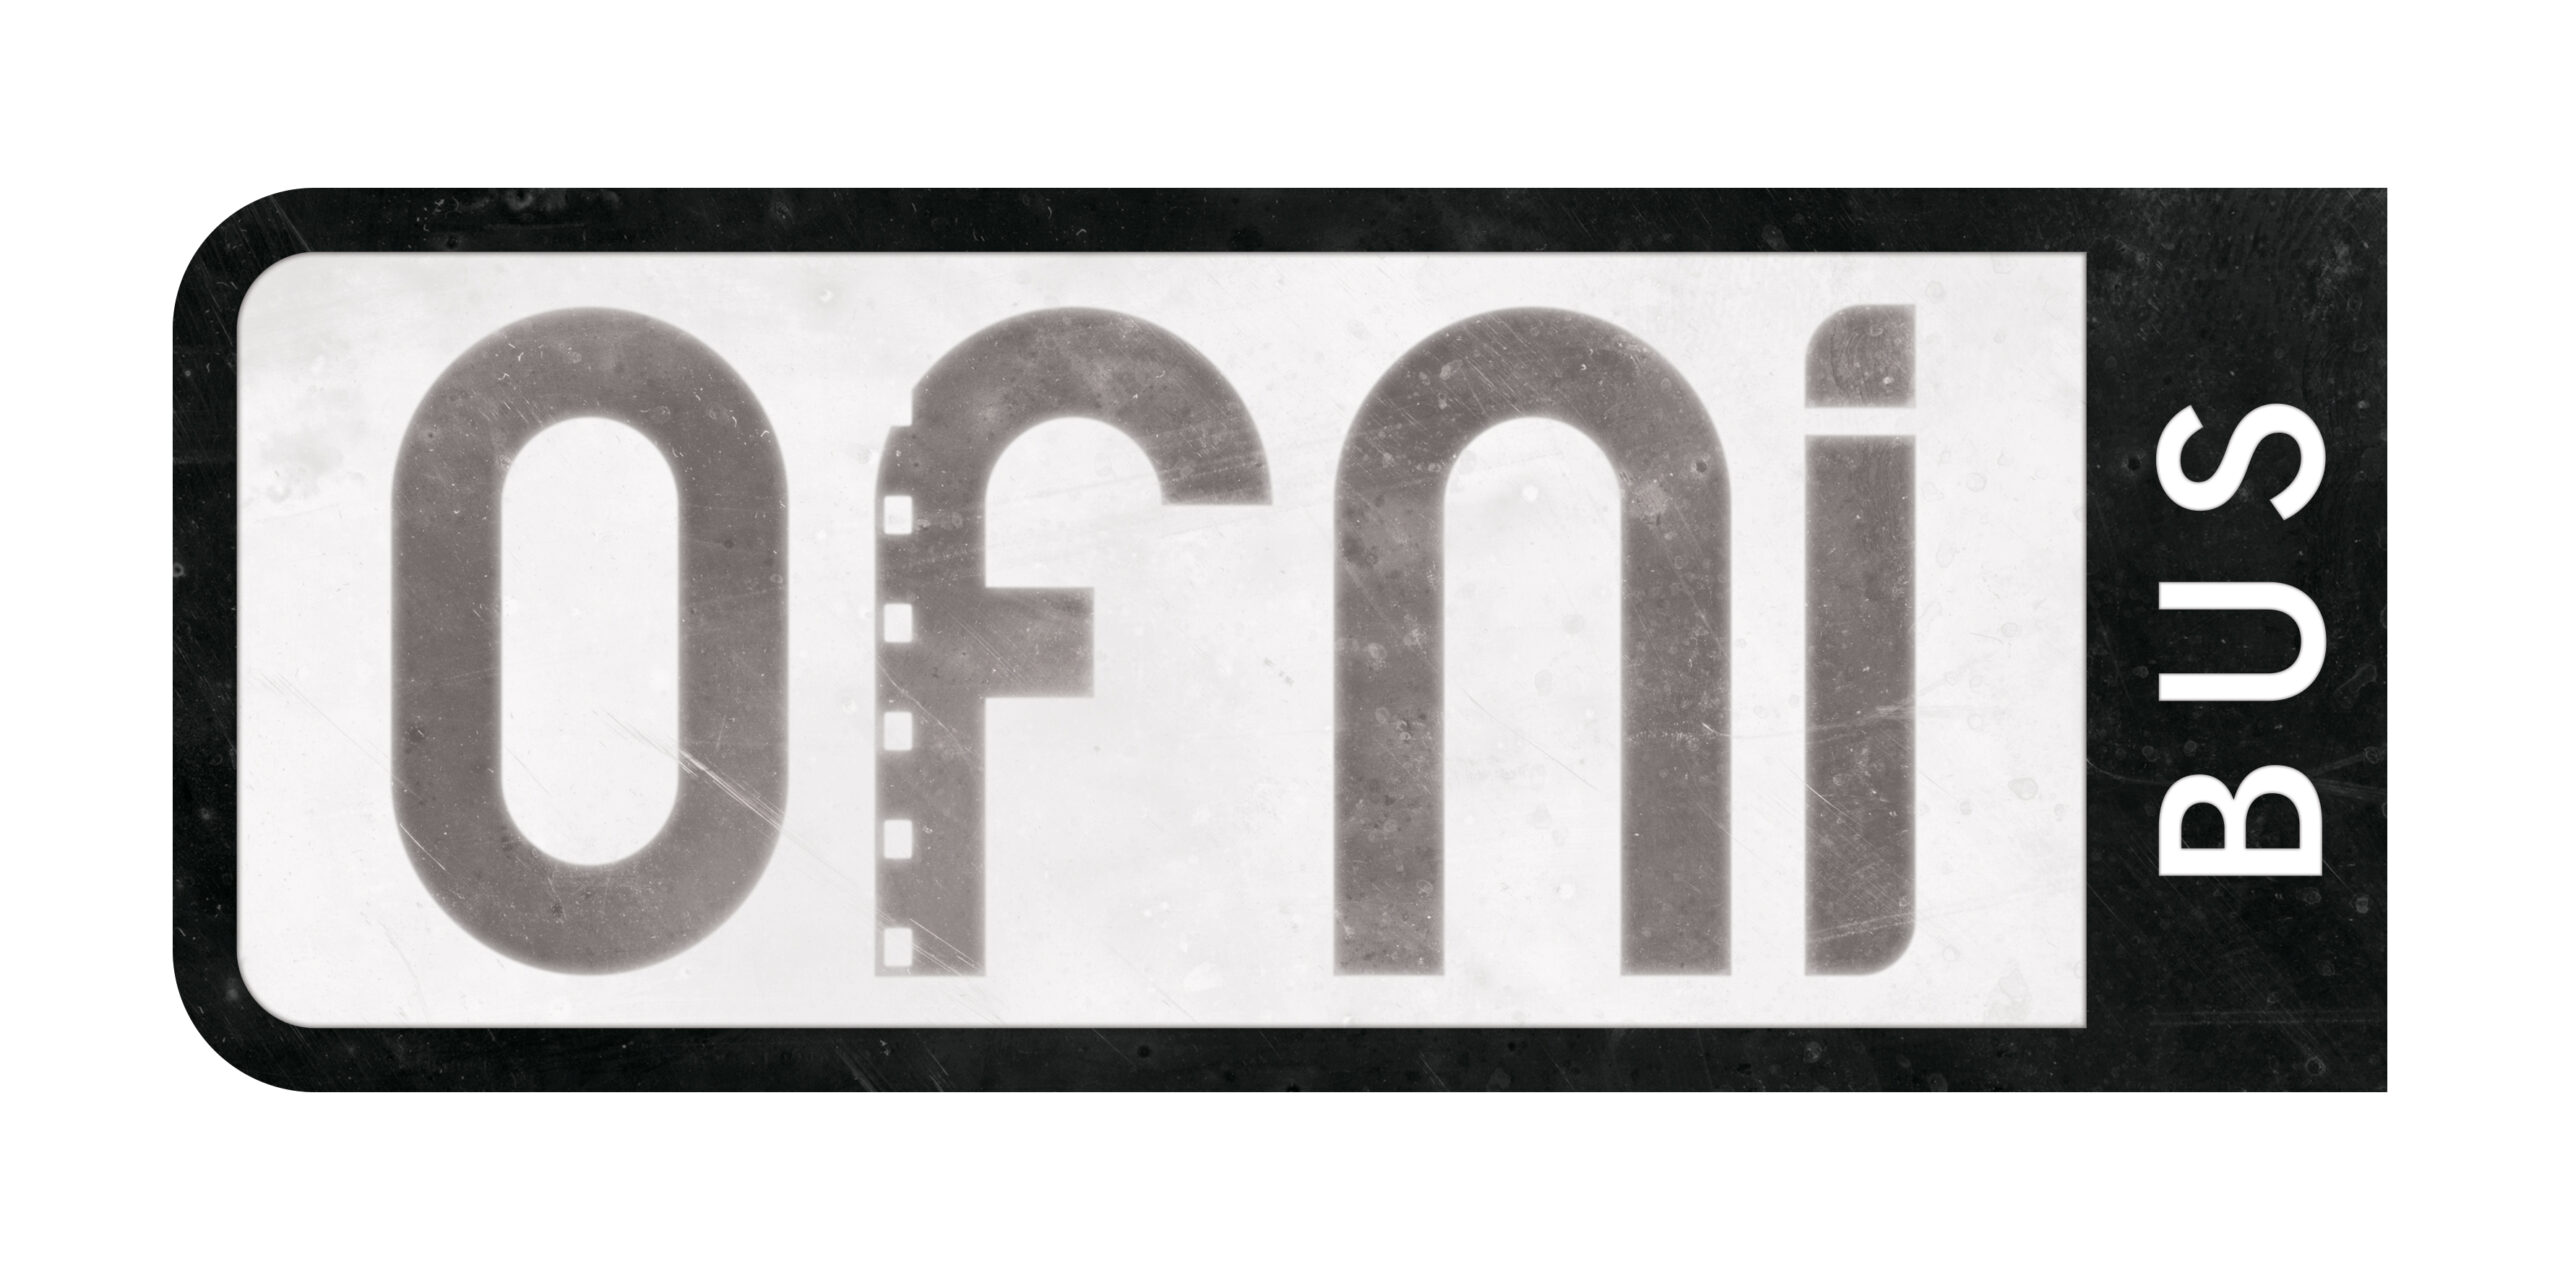 OFNIbus logo texture RVB